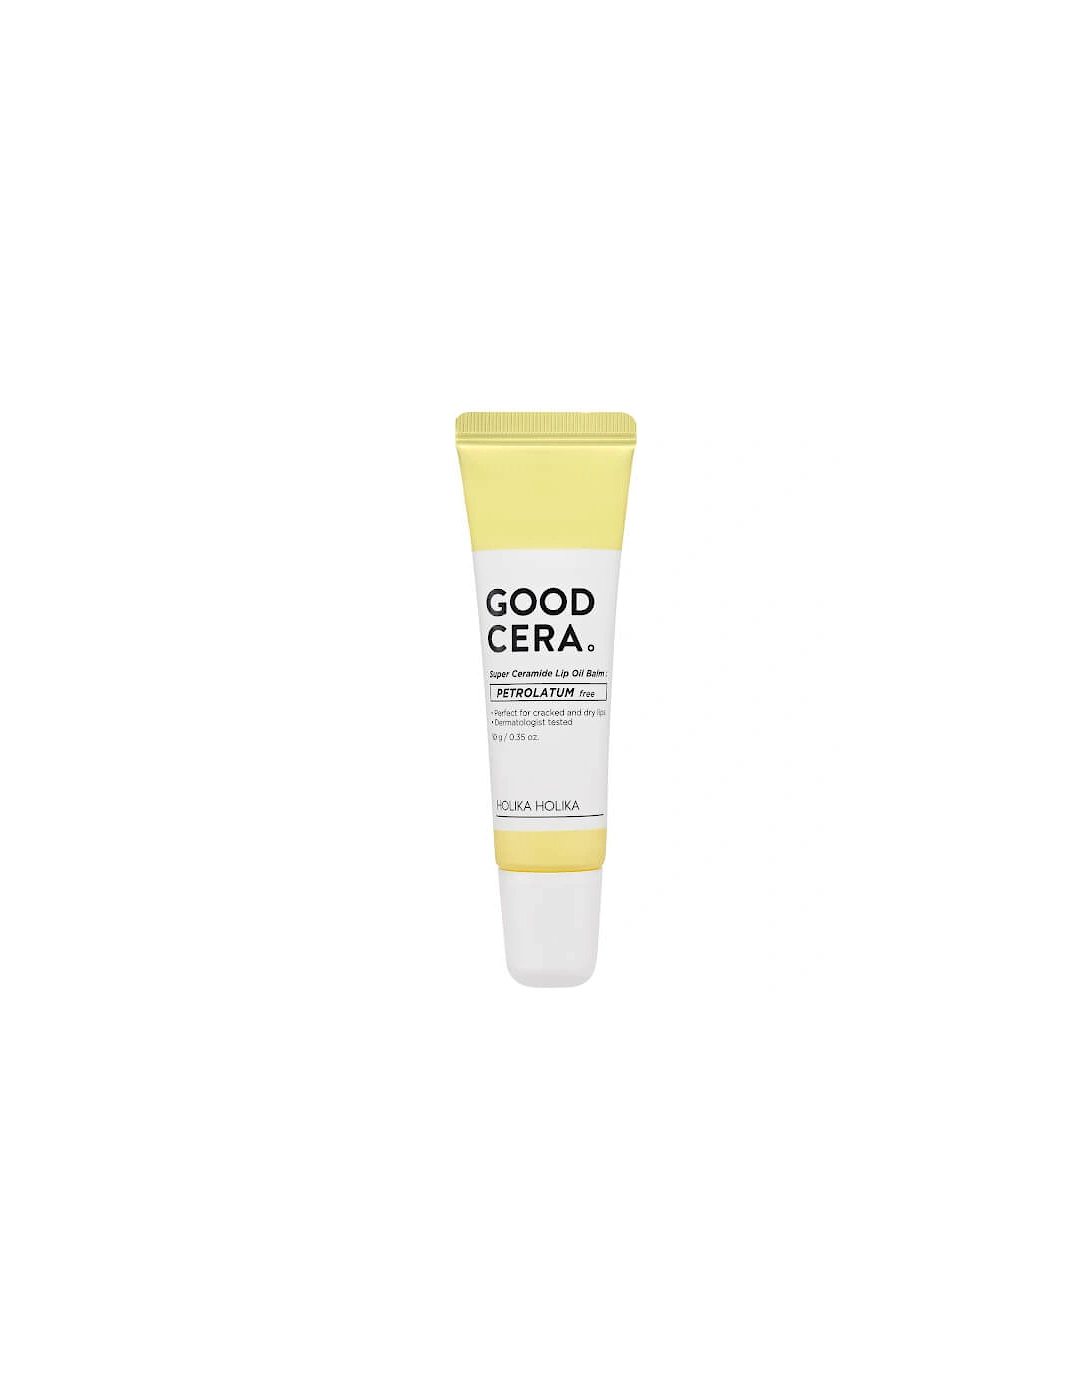 Good Cera Super Ceramide Lip Oil Balm, 2 of 1